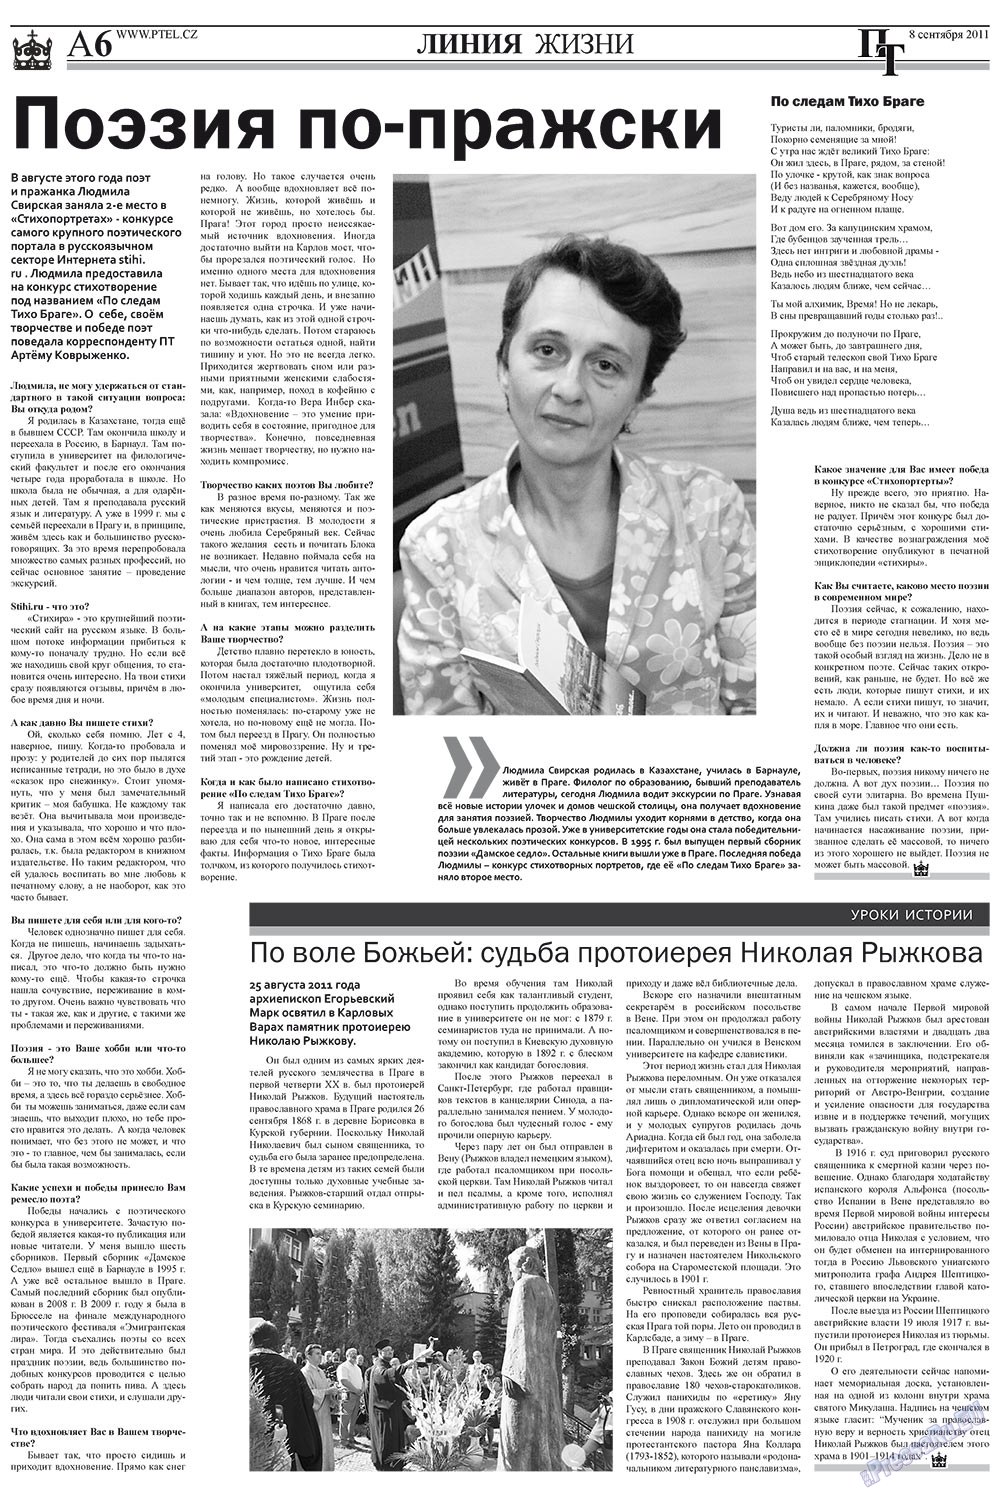 Пражский телеграф, газета. 2011 №36 стр.6